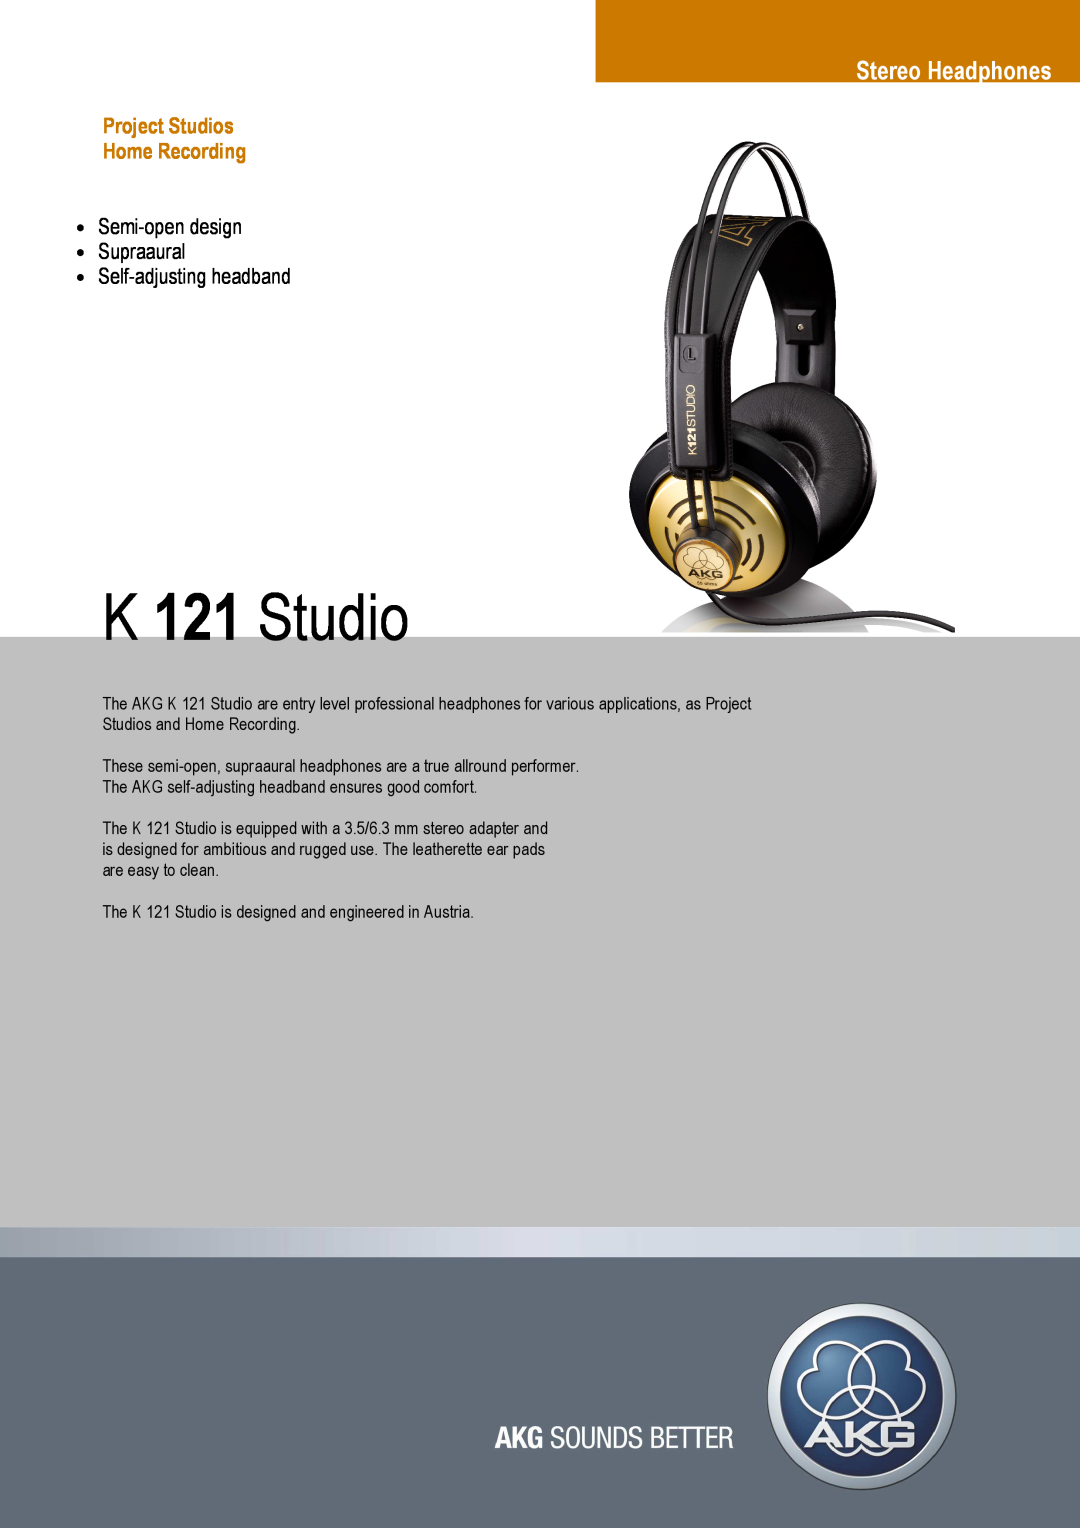 AKG Acoustics K 121 Studio manual Stereo Headphones, Project Studios Home Recording, ∙Semi-opendesign ∙Supraaural 